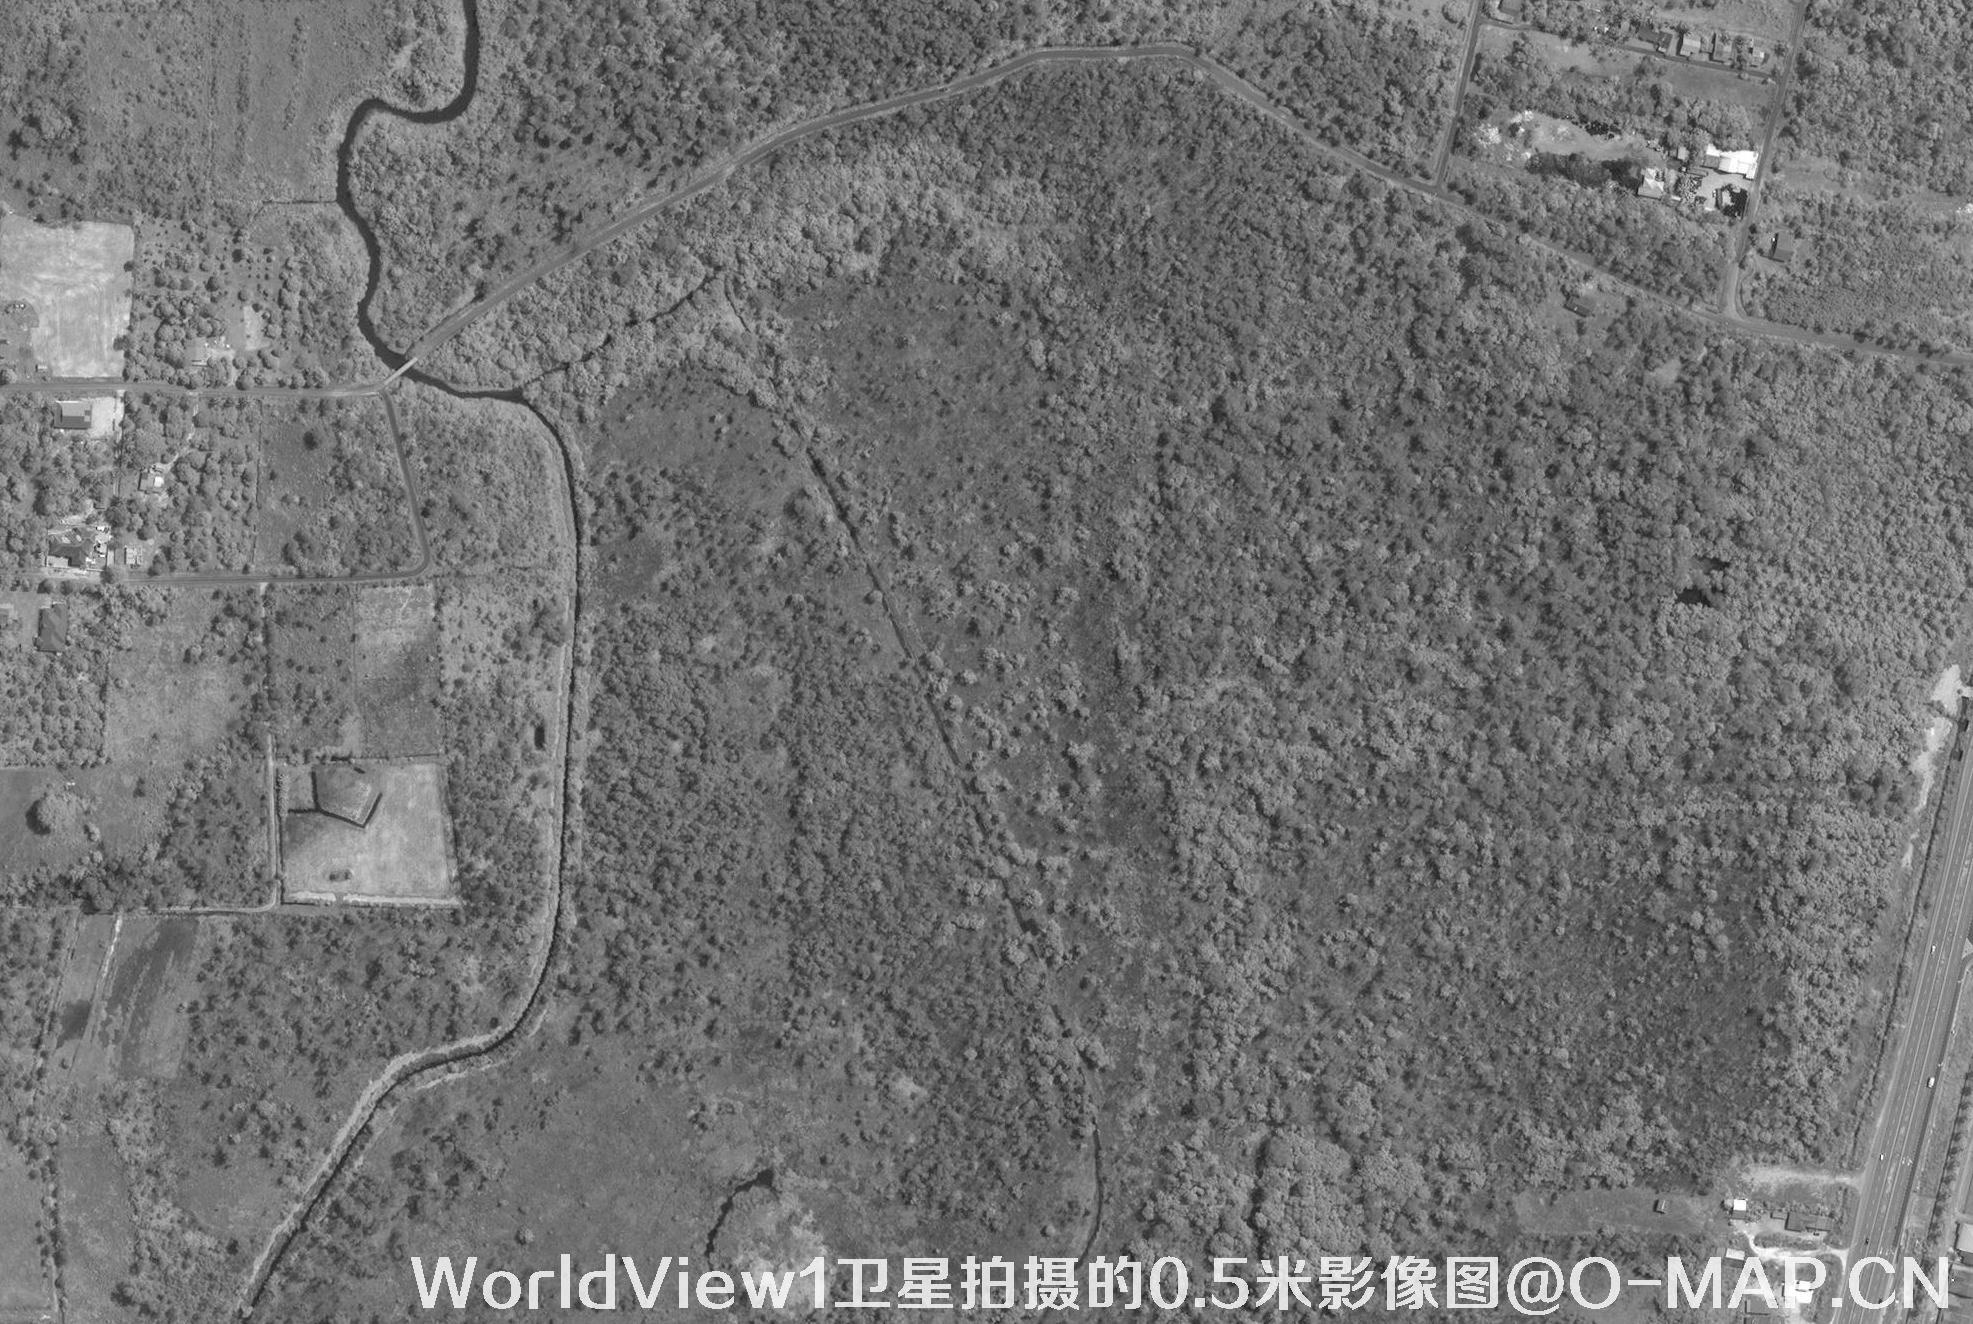 WorldView1卫星拍摄的0.5米分辨率黑白图片